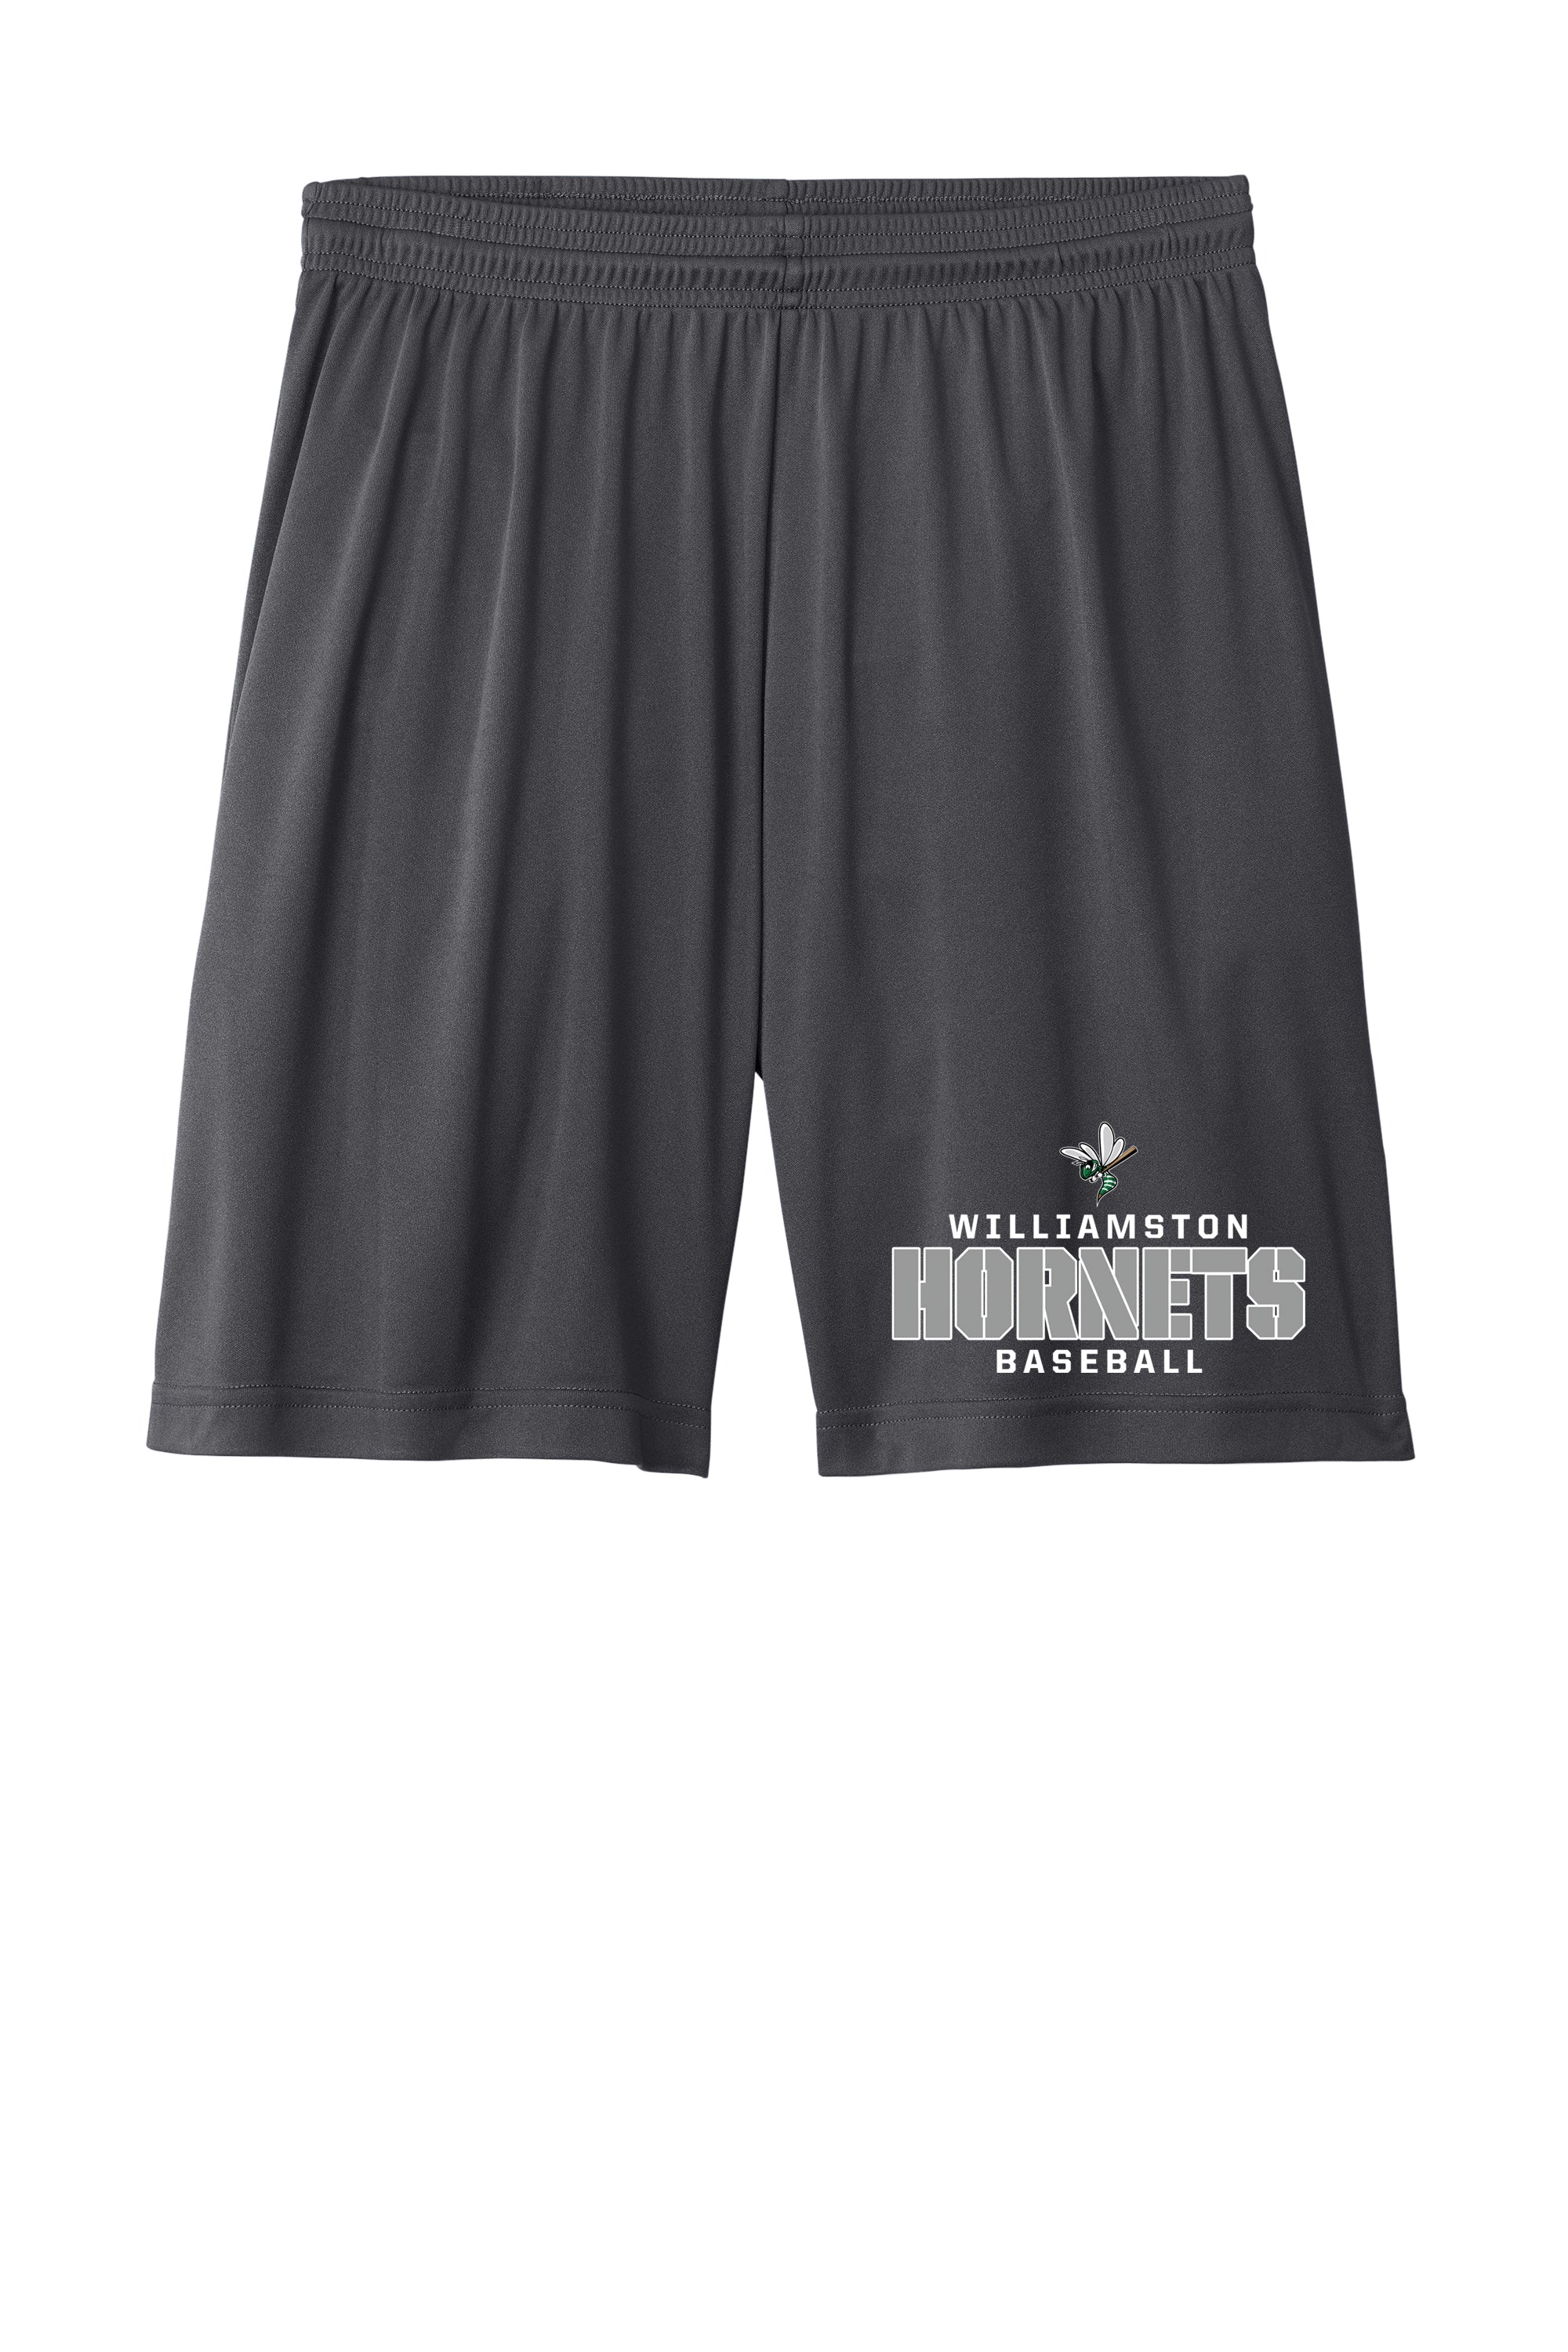 Williamston Baseball - Shorts